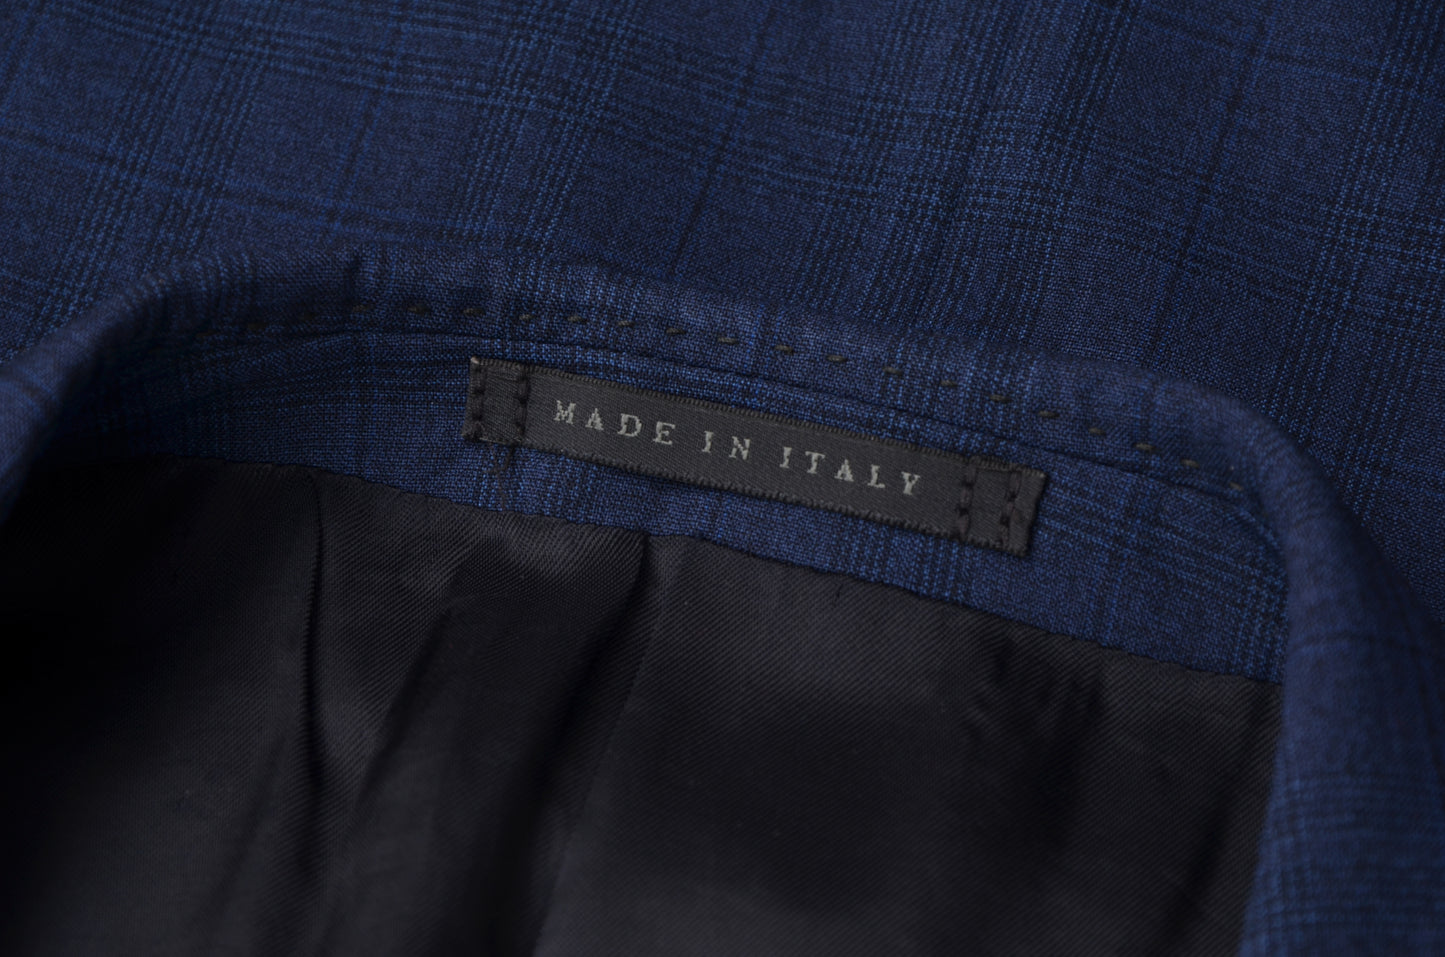 Luigi Bianchi Mantova Sartoria Suit Size 50 - Blue Plaid